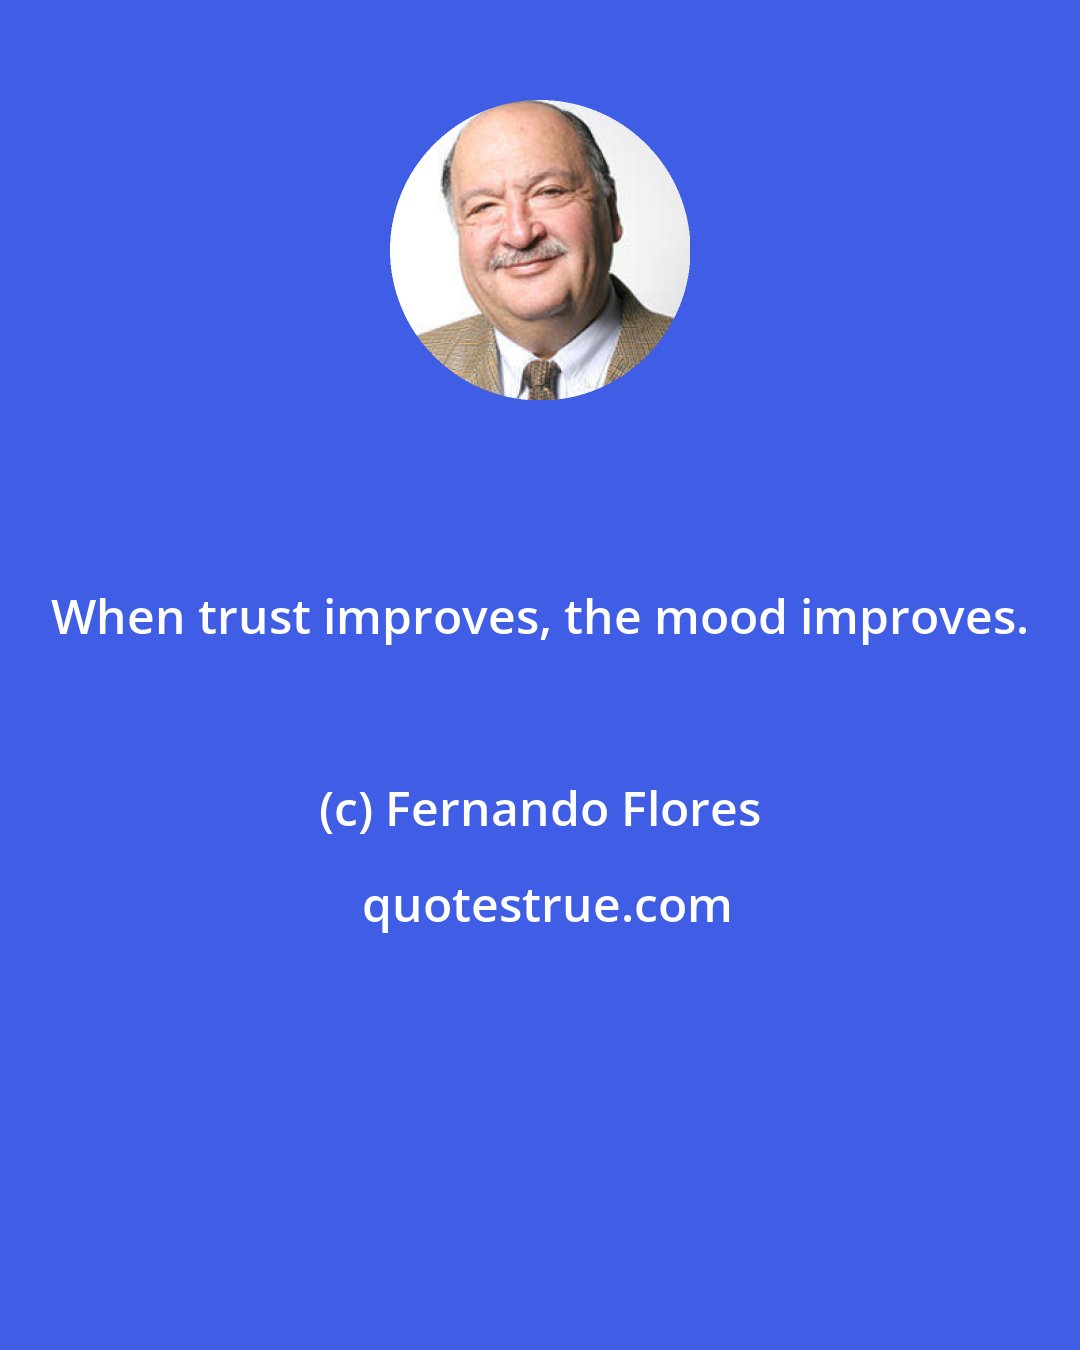 Fernando Flores: When trust improves, the mood improves.